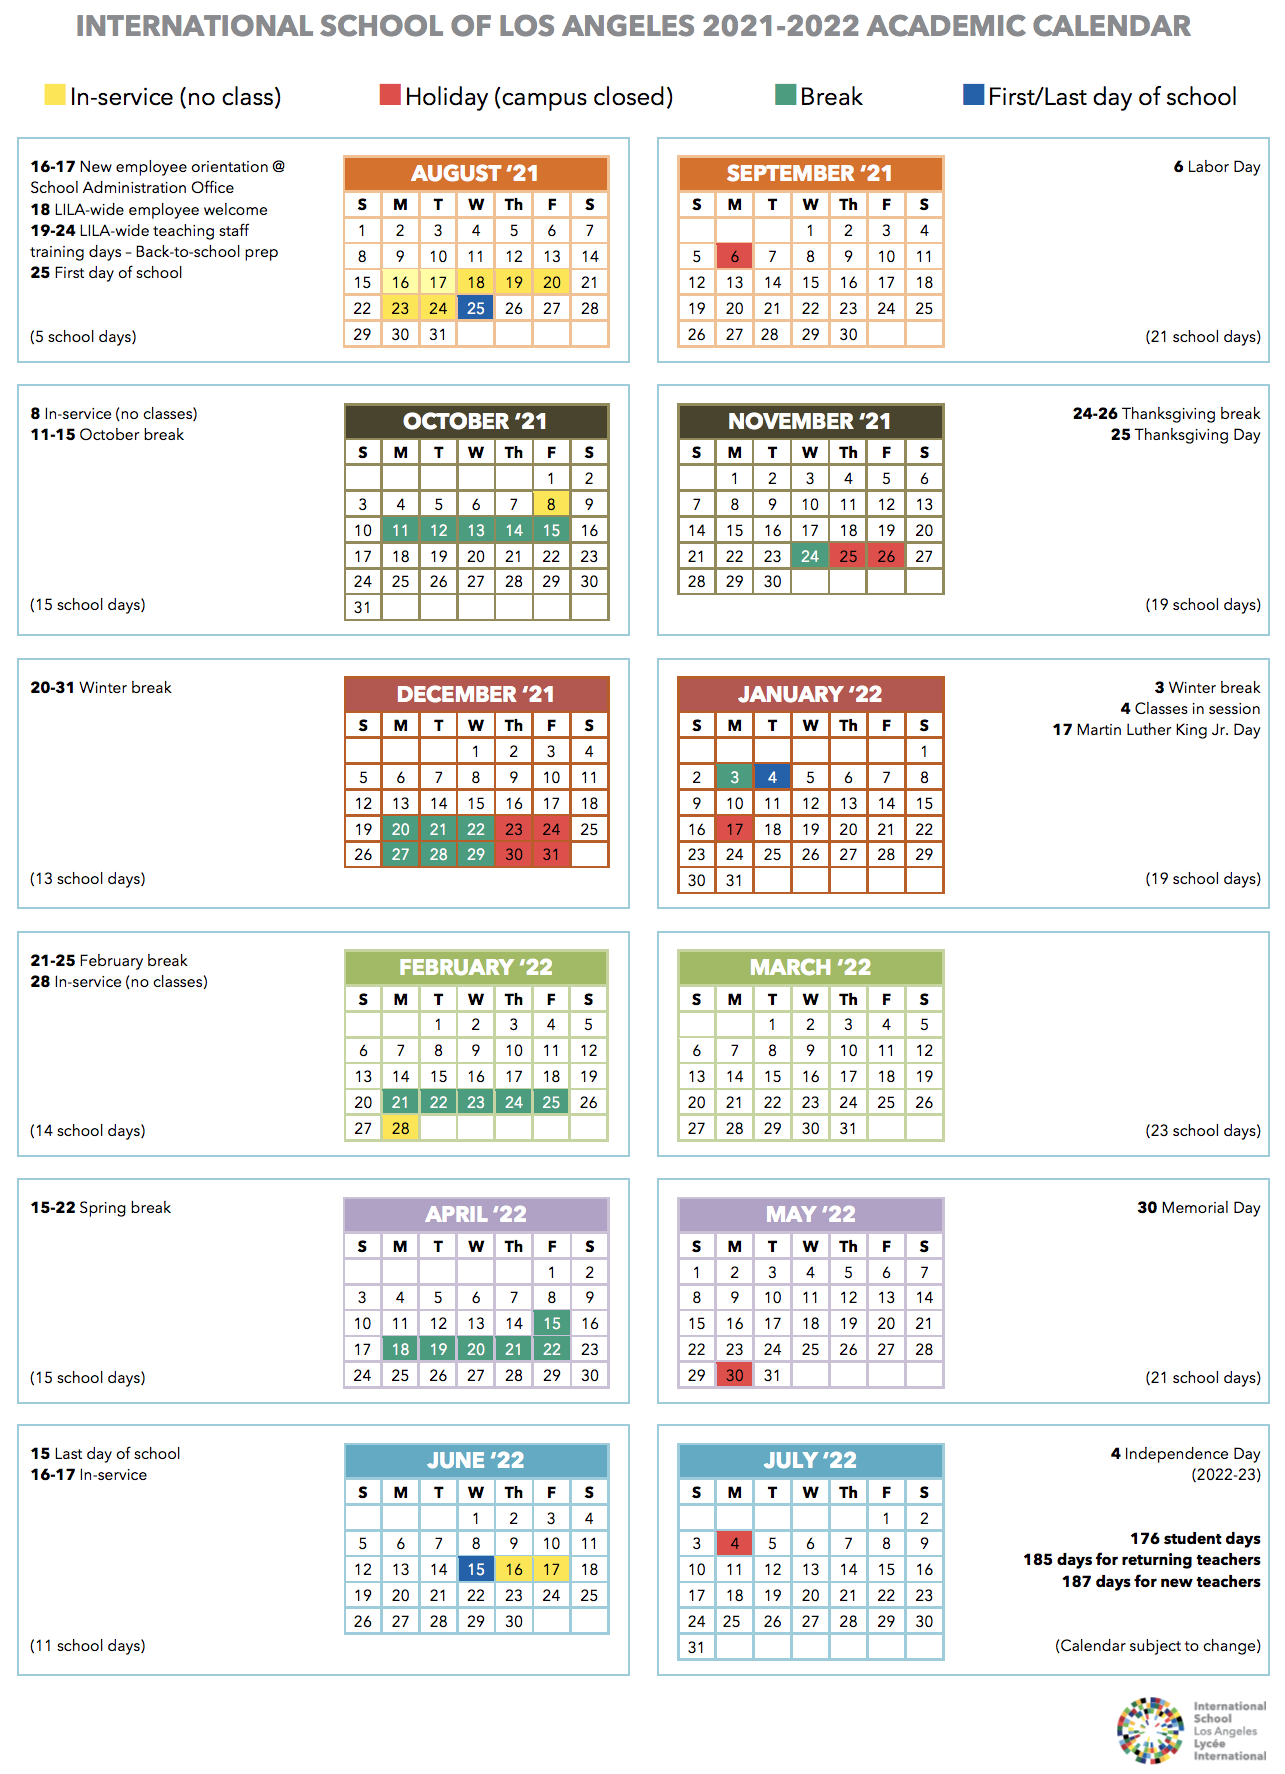 Csun Academic Calendar 2022 2023 Calendar | International School Of Los Angeles